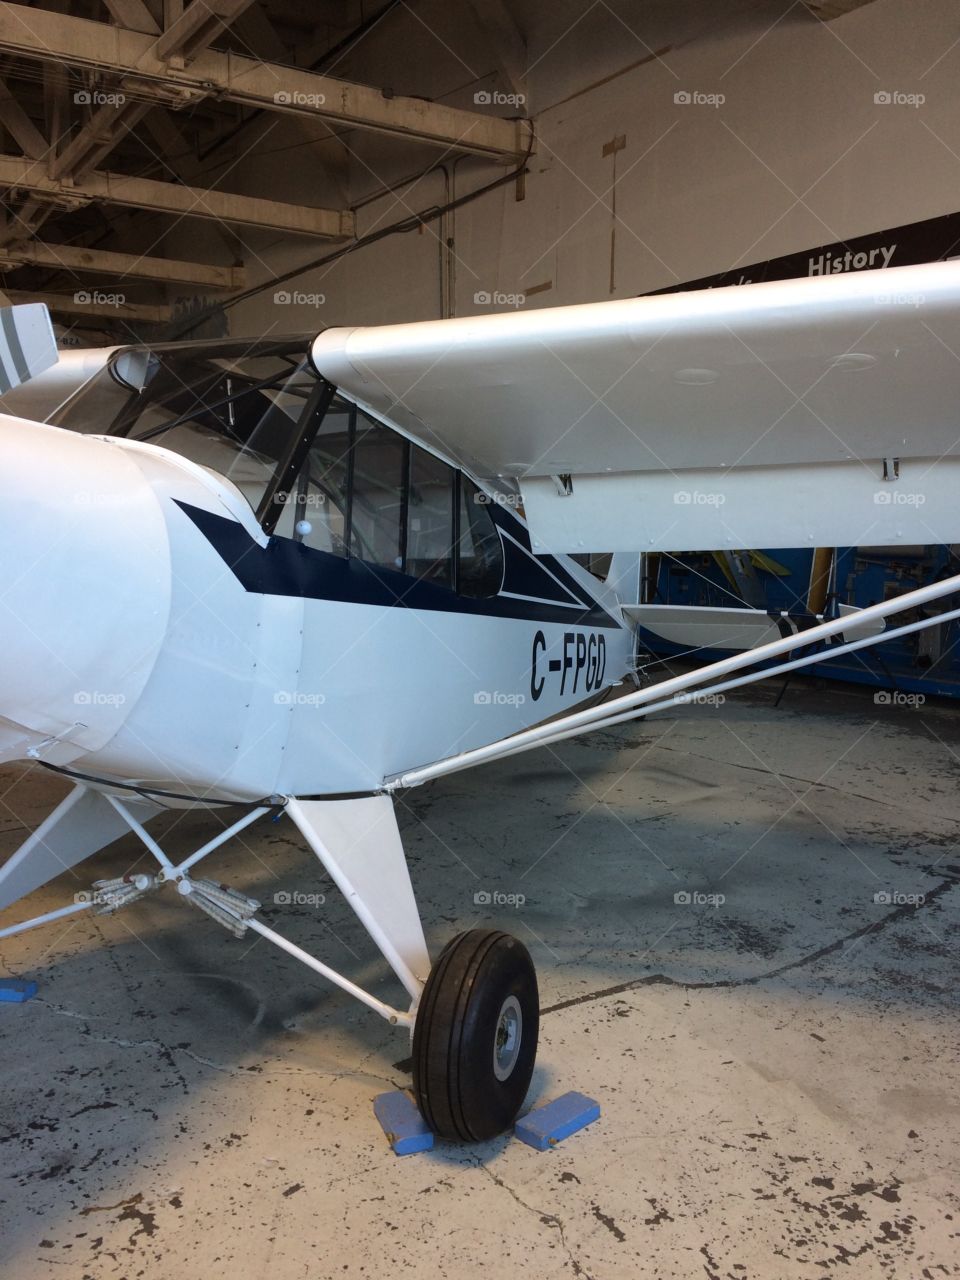 Old Airplane in Edmonton